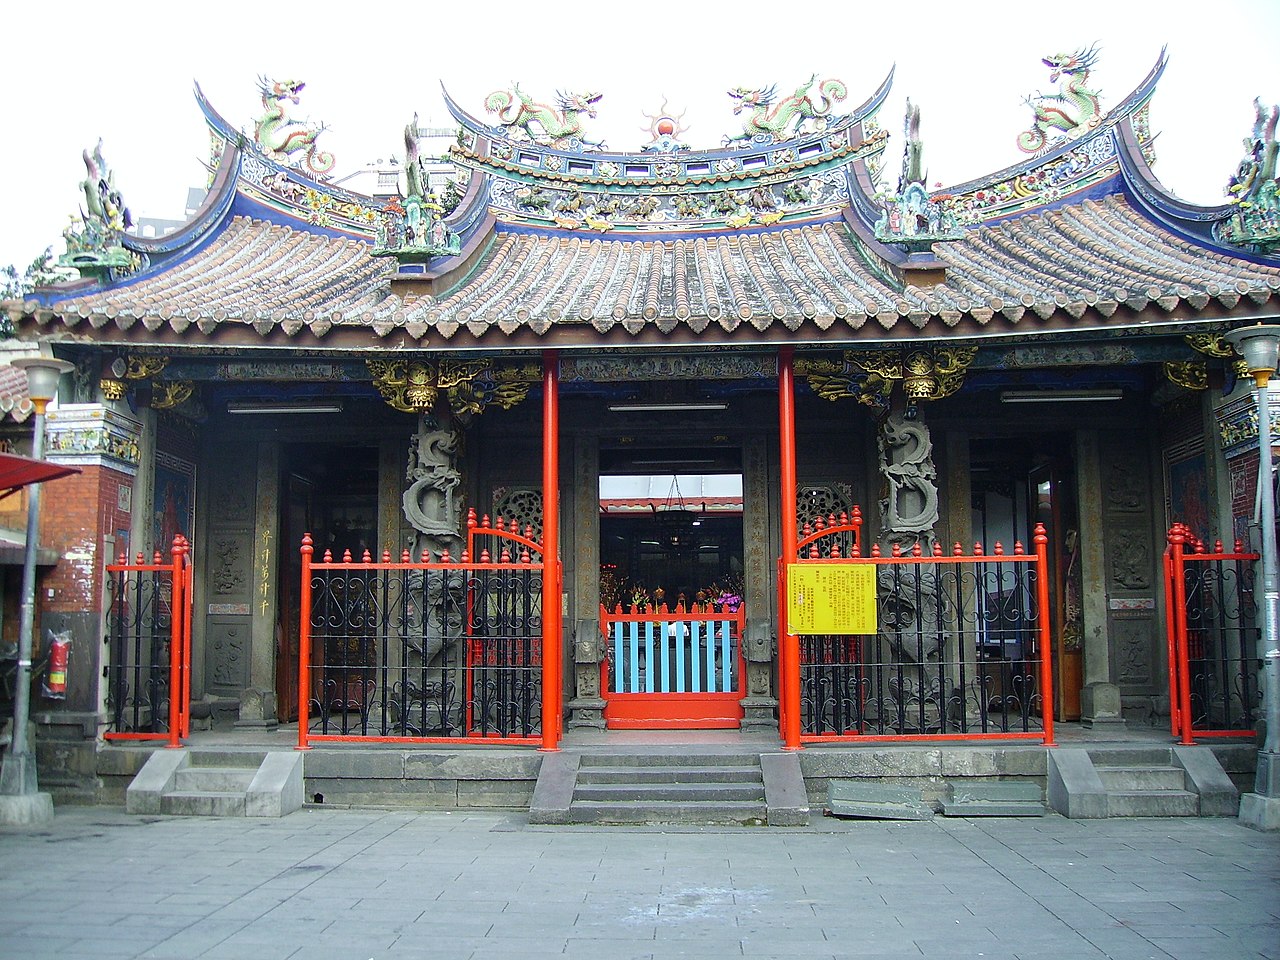 file:chin s temple in taipeijpg